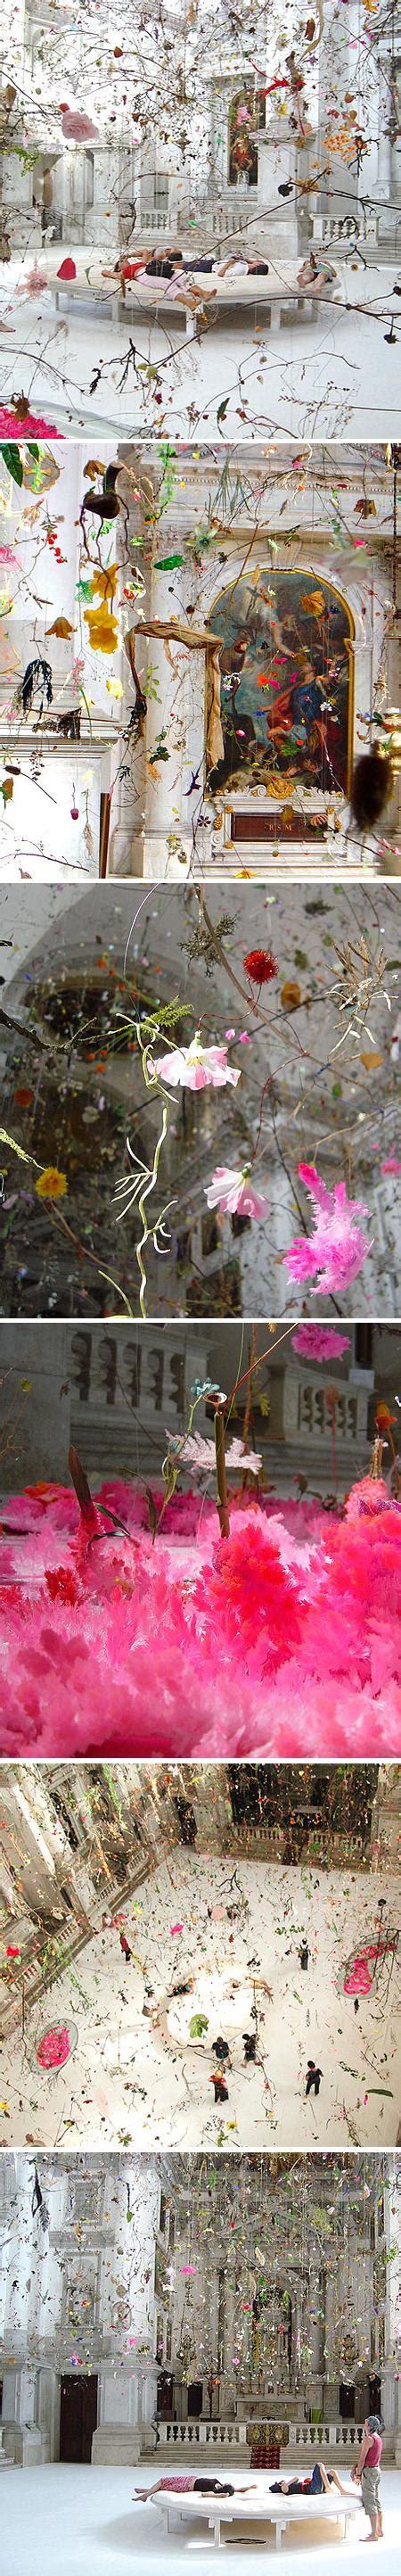 Falling Garden Was An Art Installation For The 50th Venice Biennale